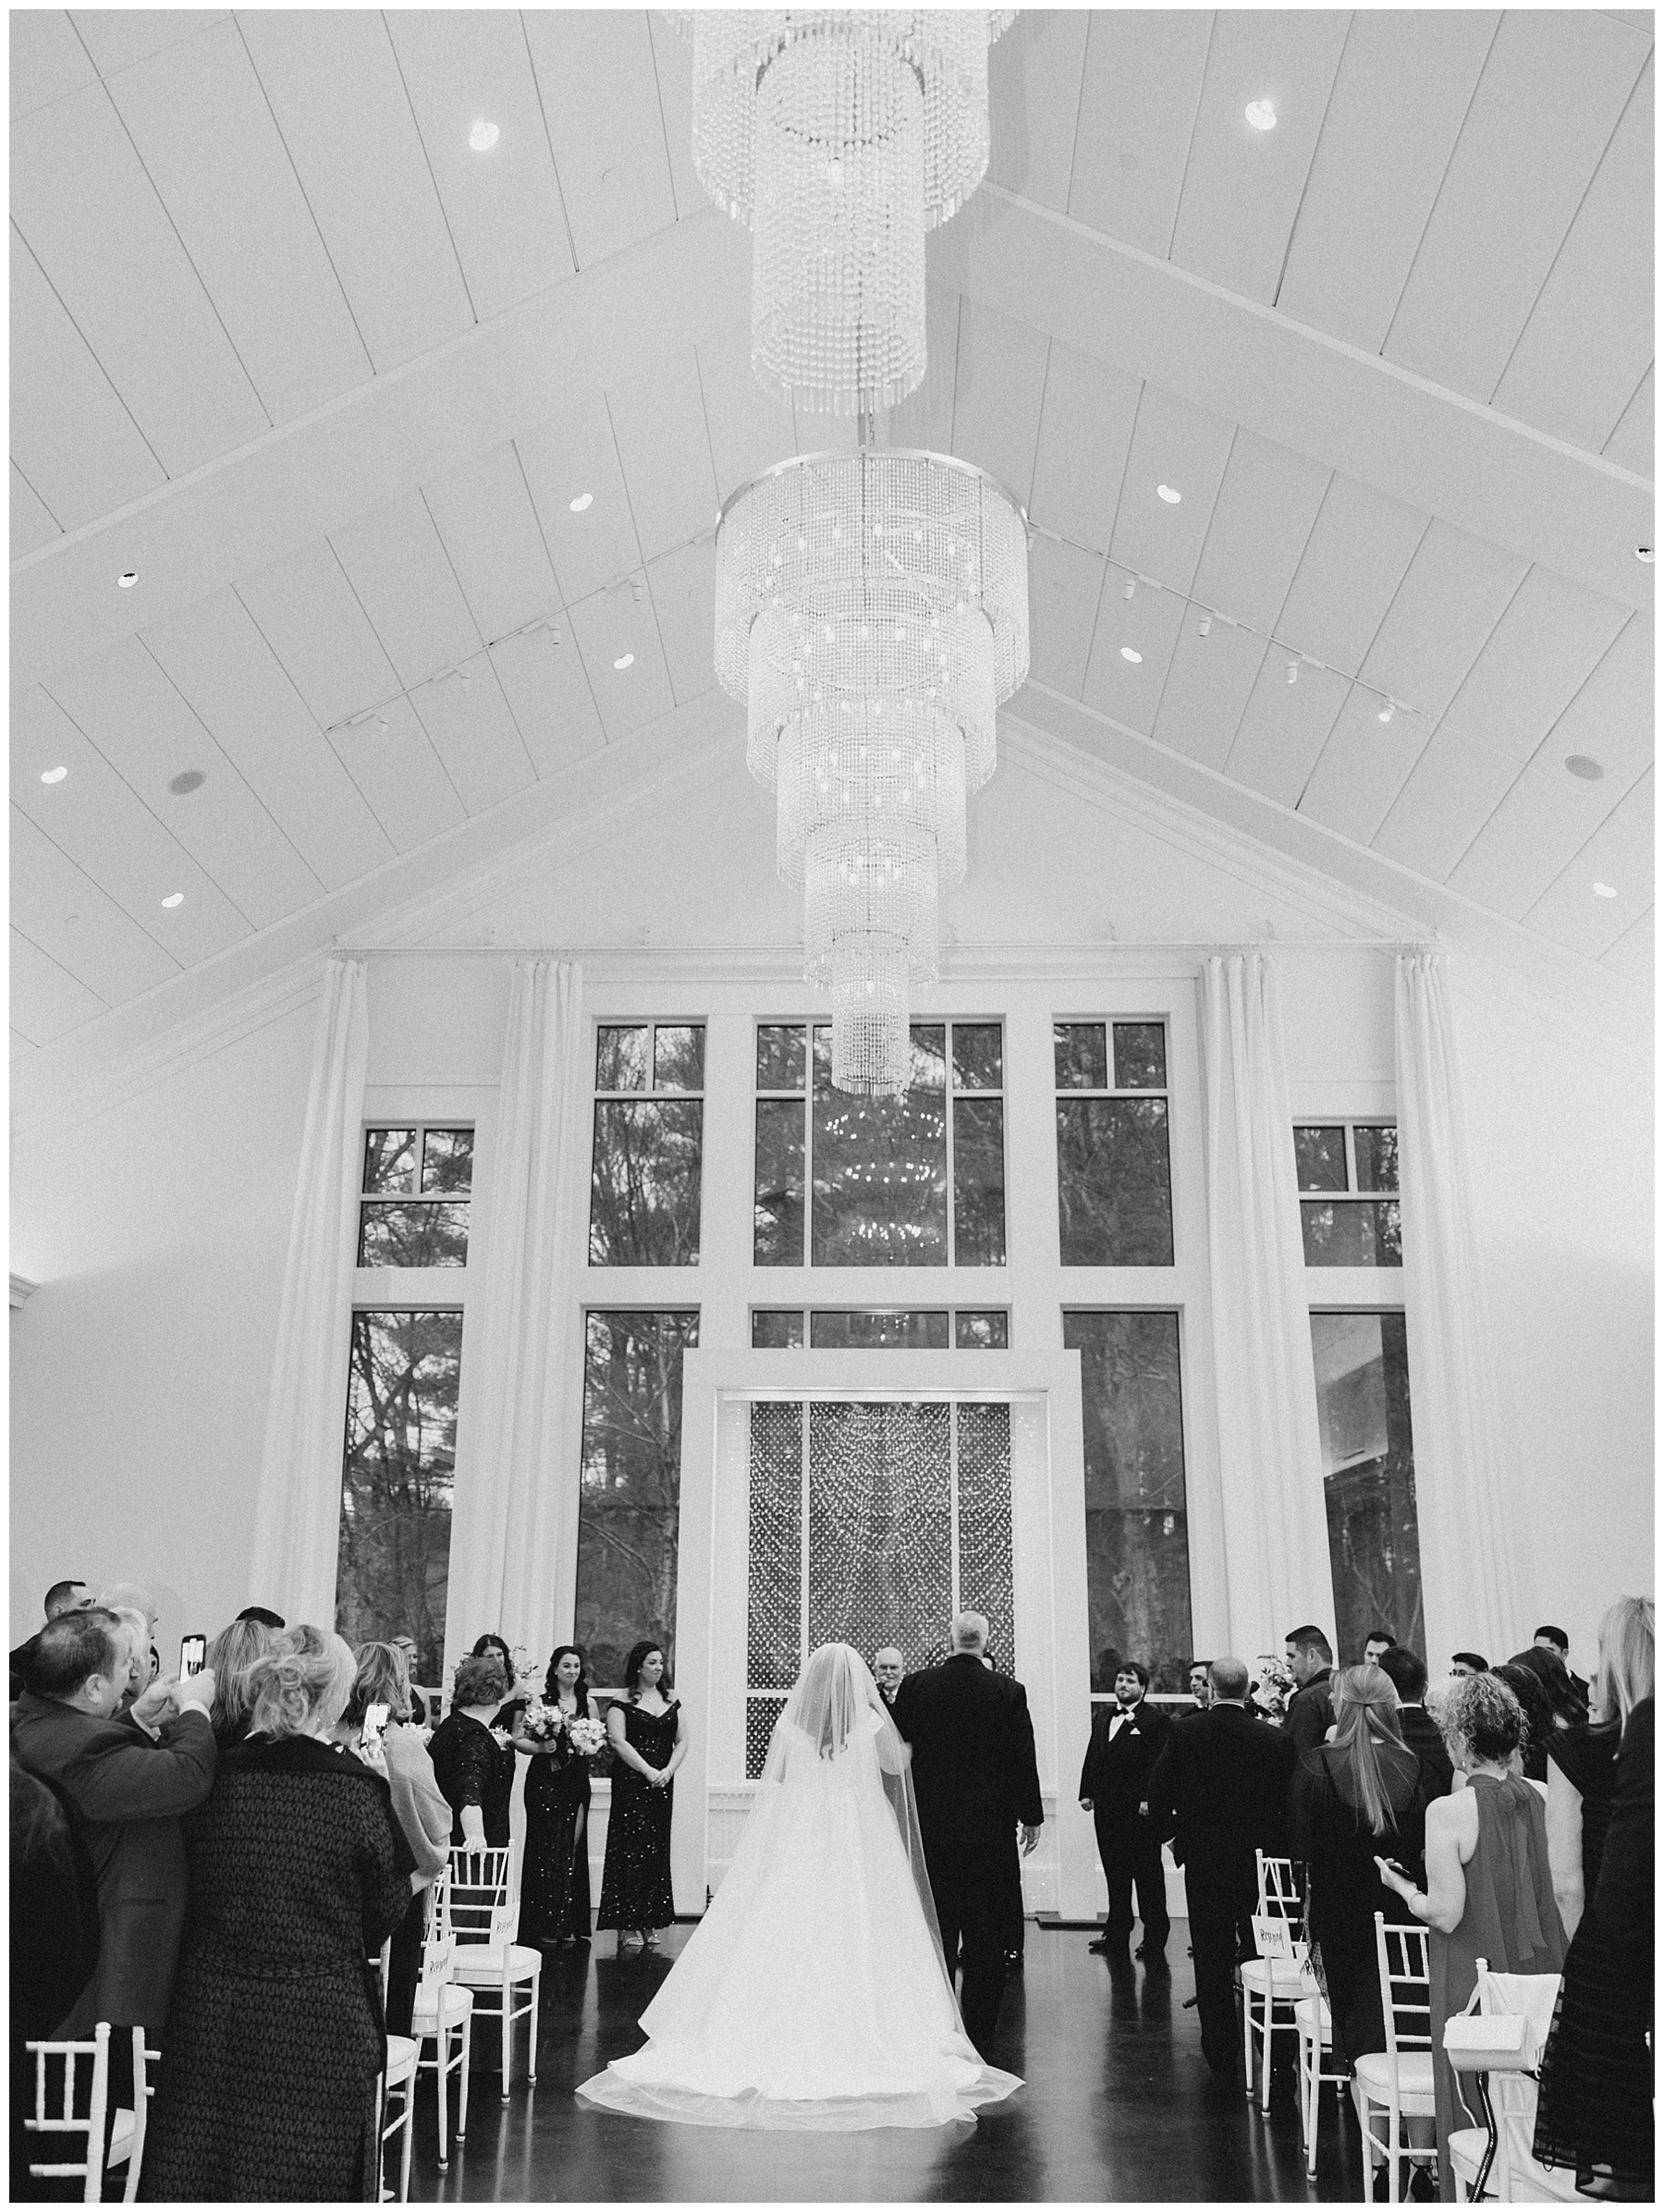 Elegant Lakeview Pavilion Wedding 